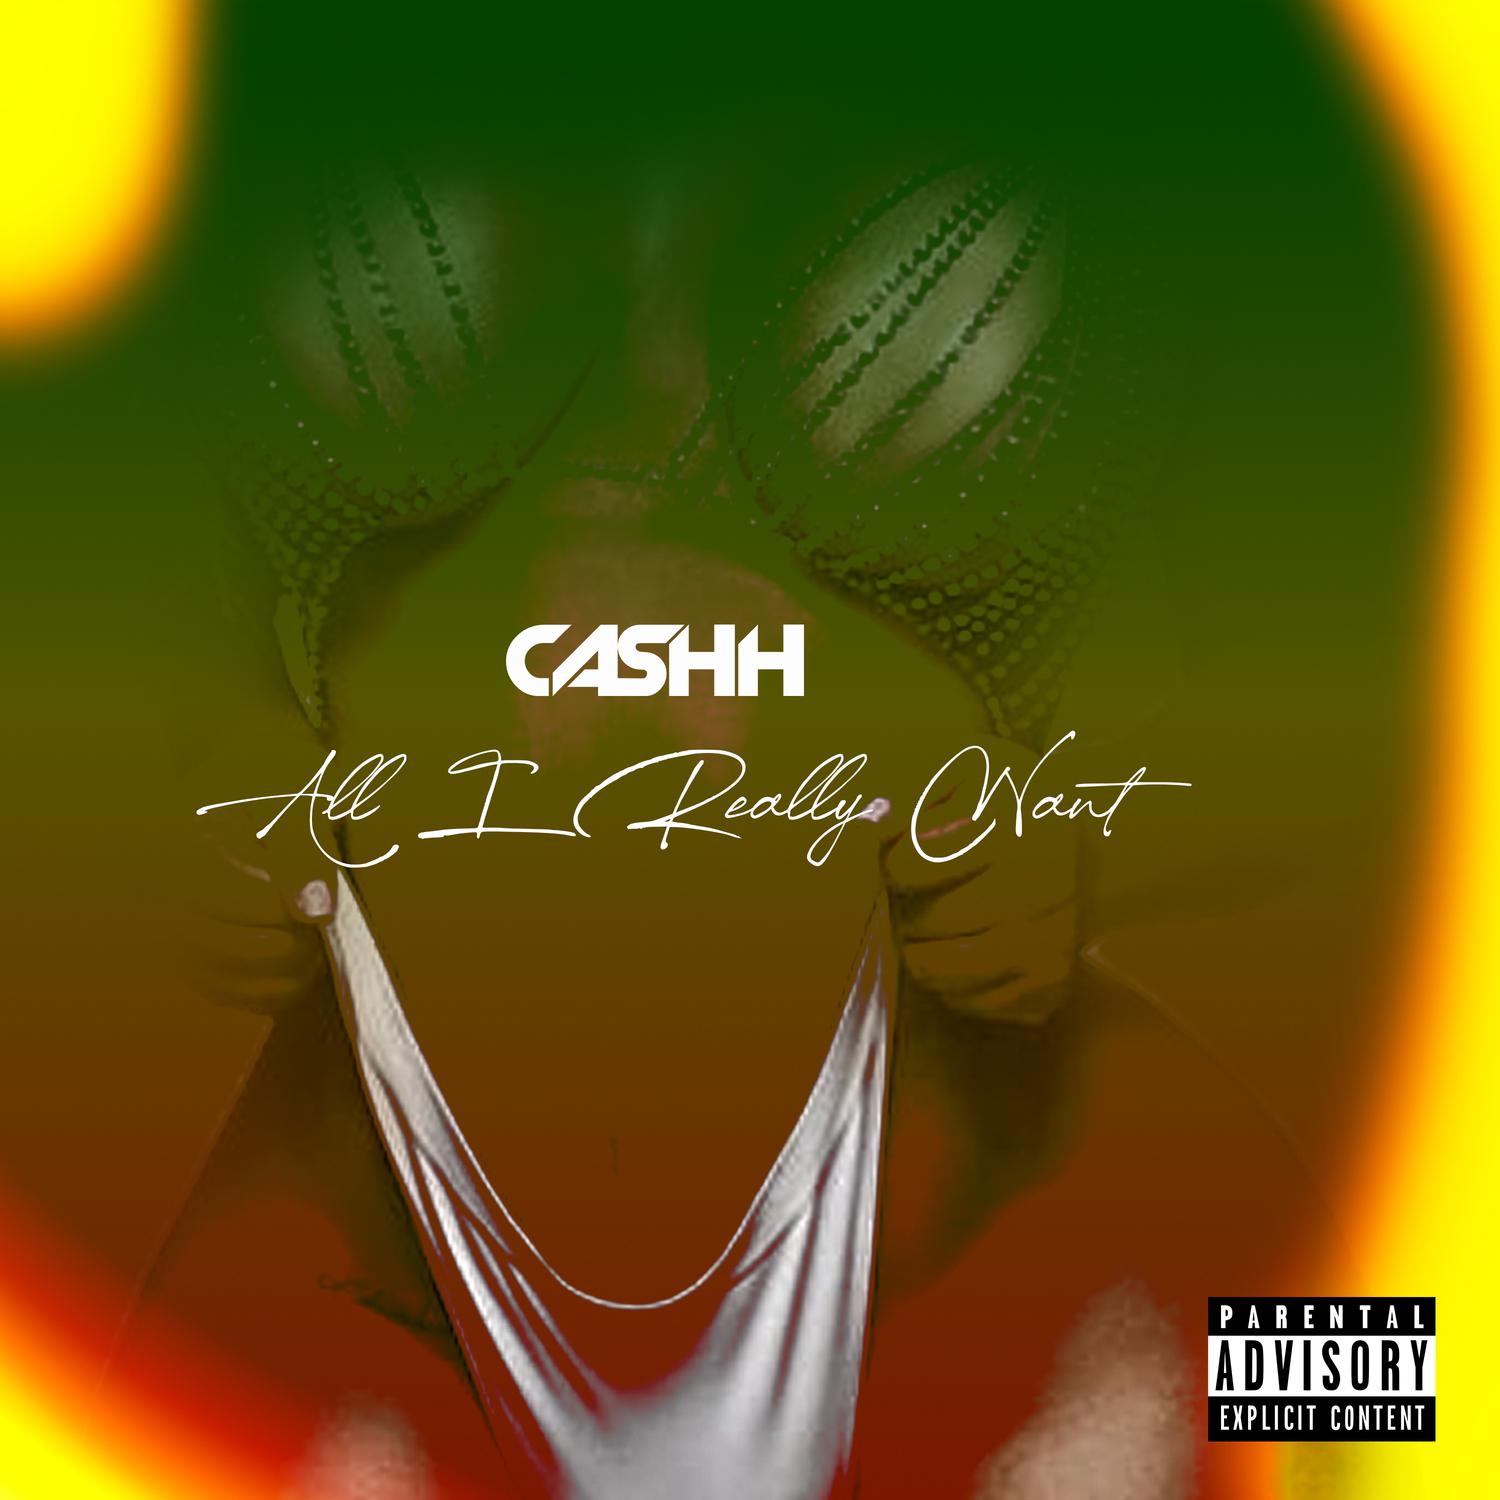 Cashh - All I Really Want